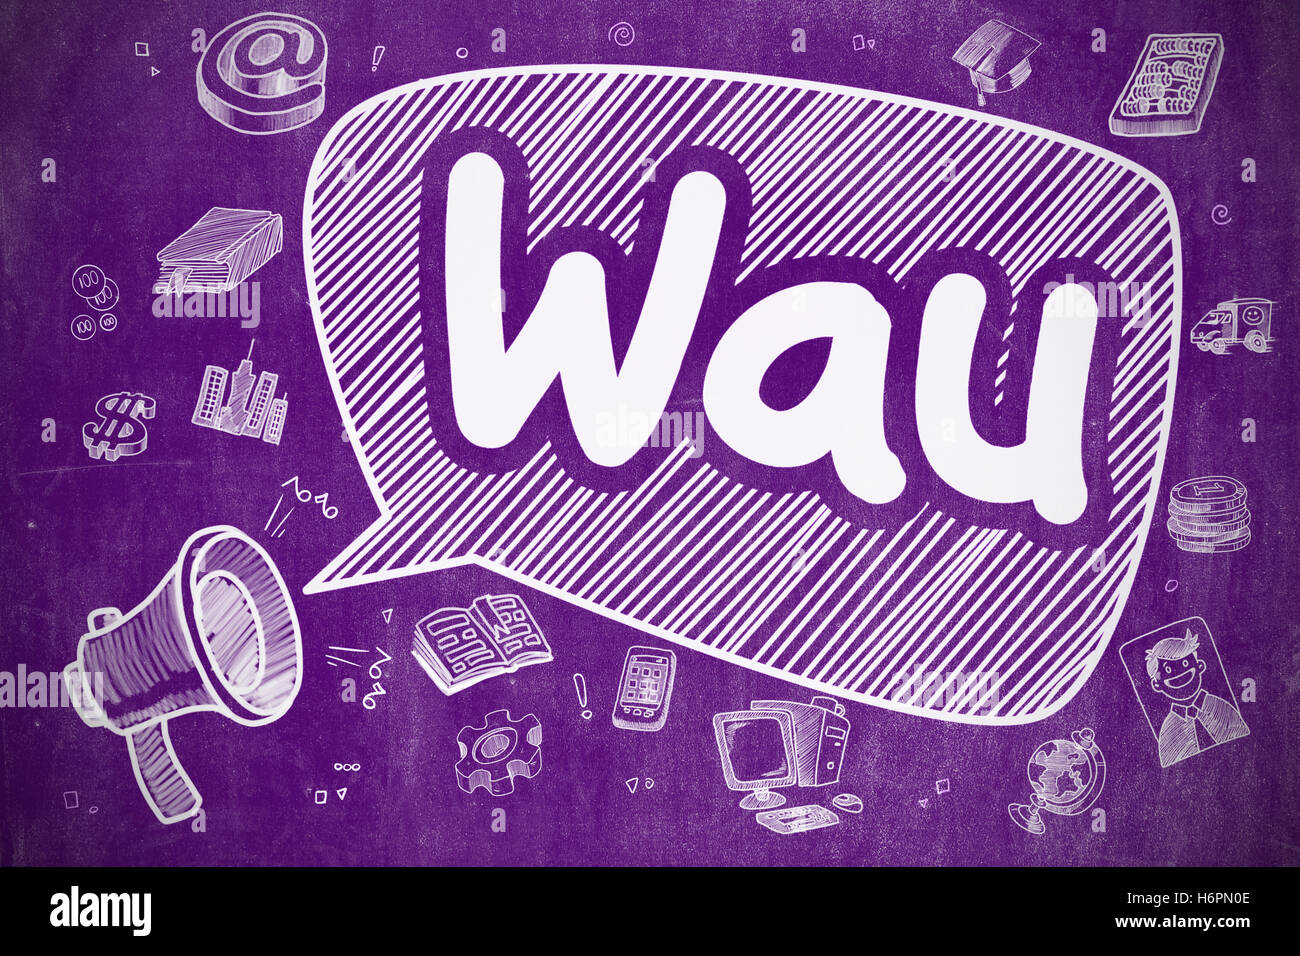 Wau - Doodle Illustration on Purple Chalkboard. Stock Photo